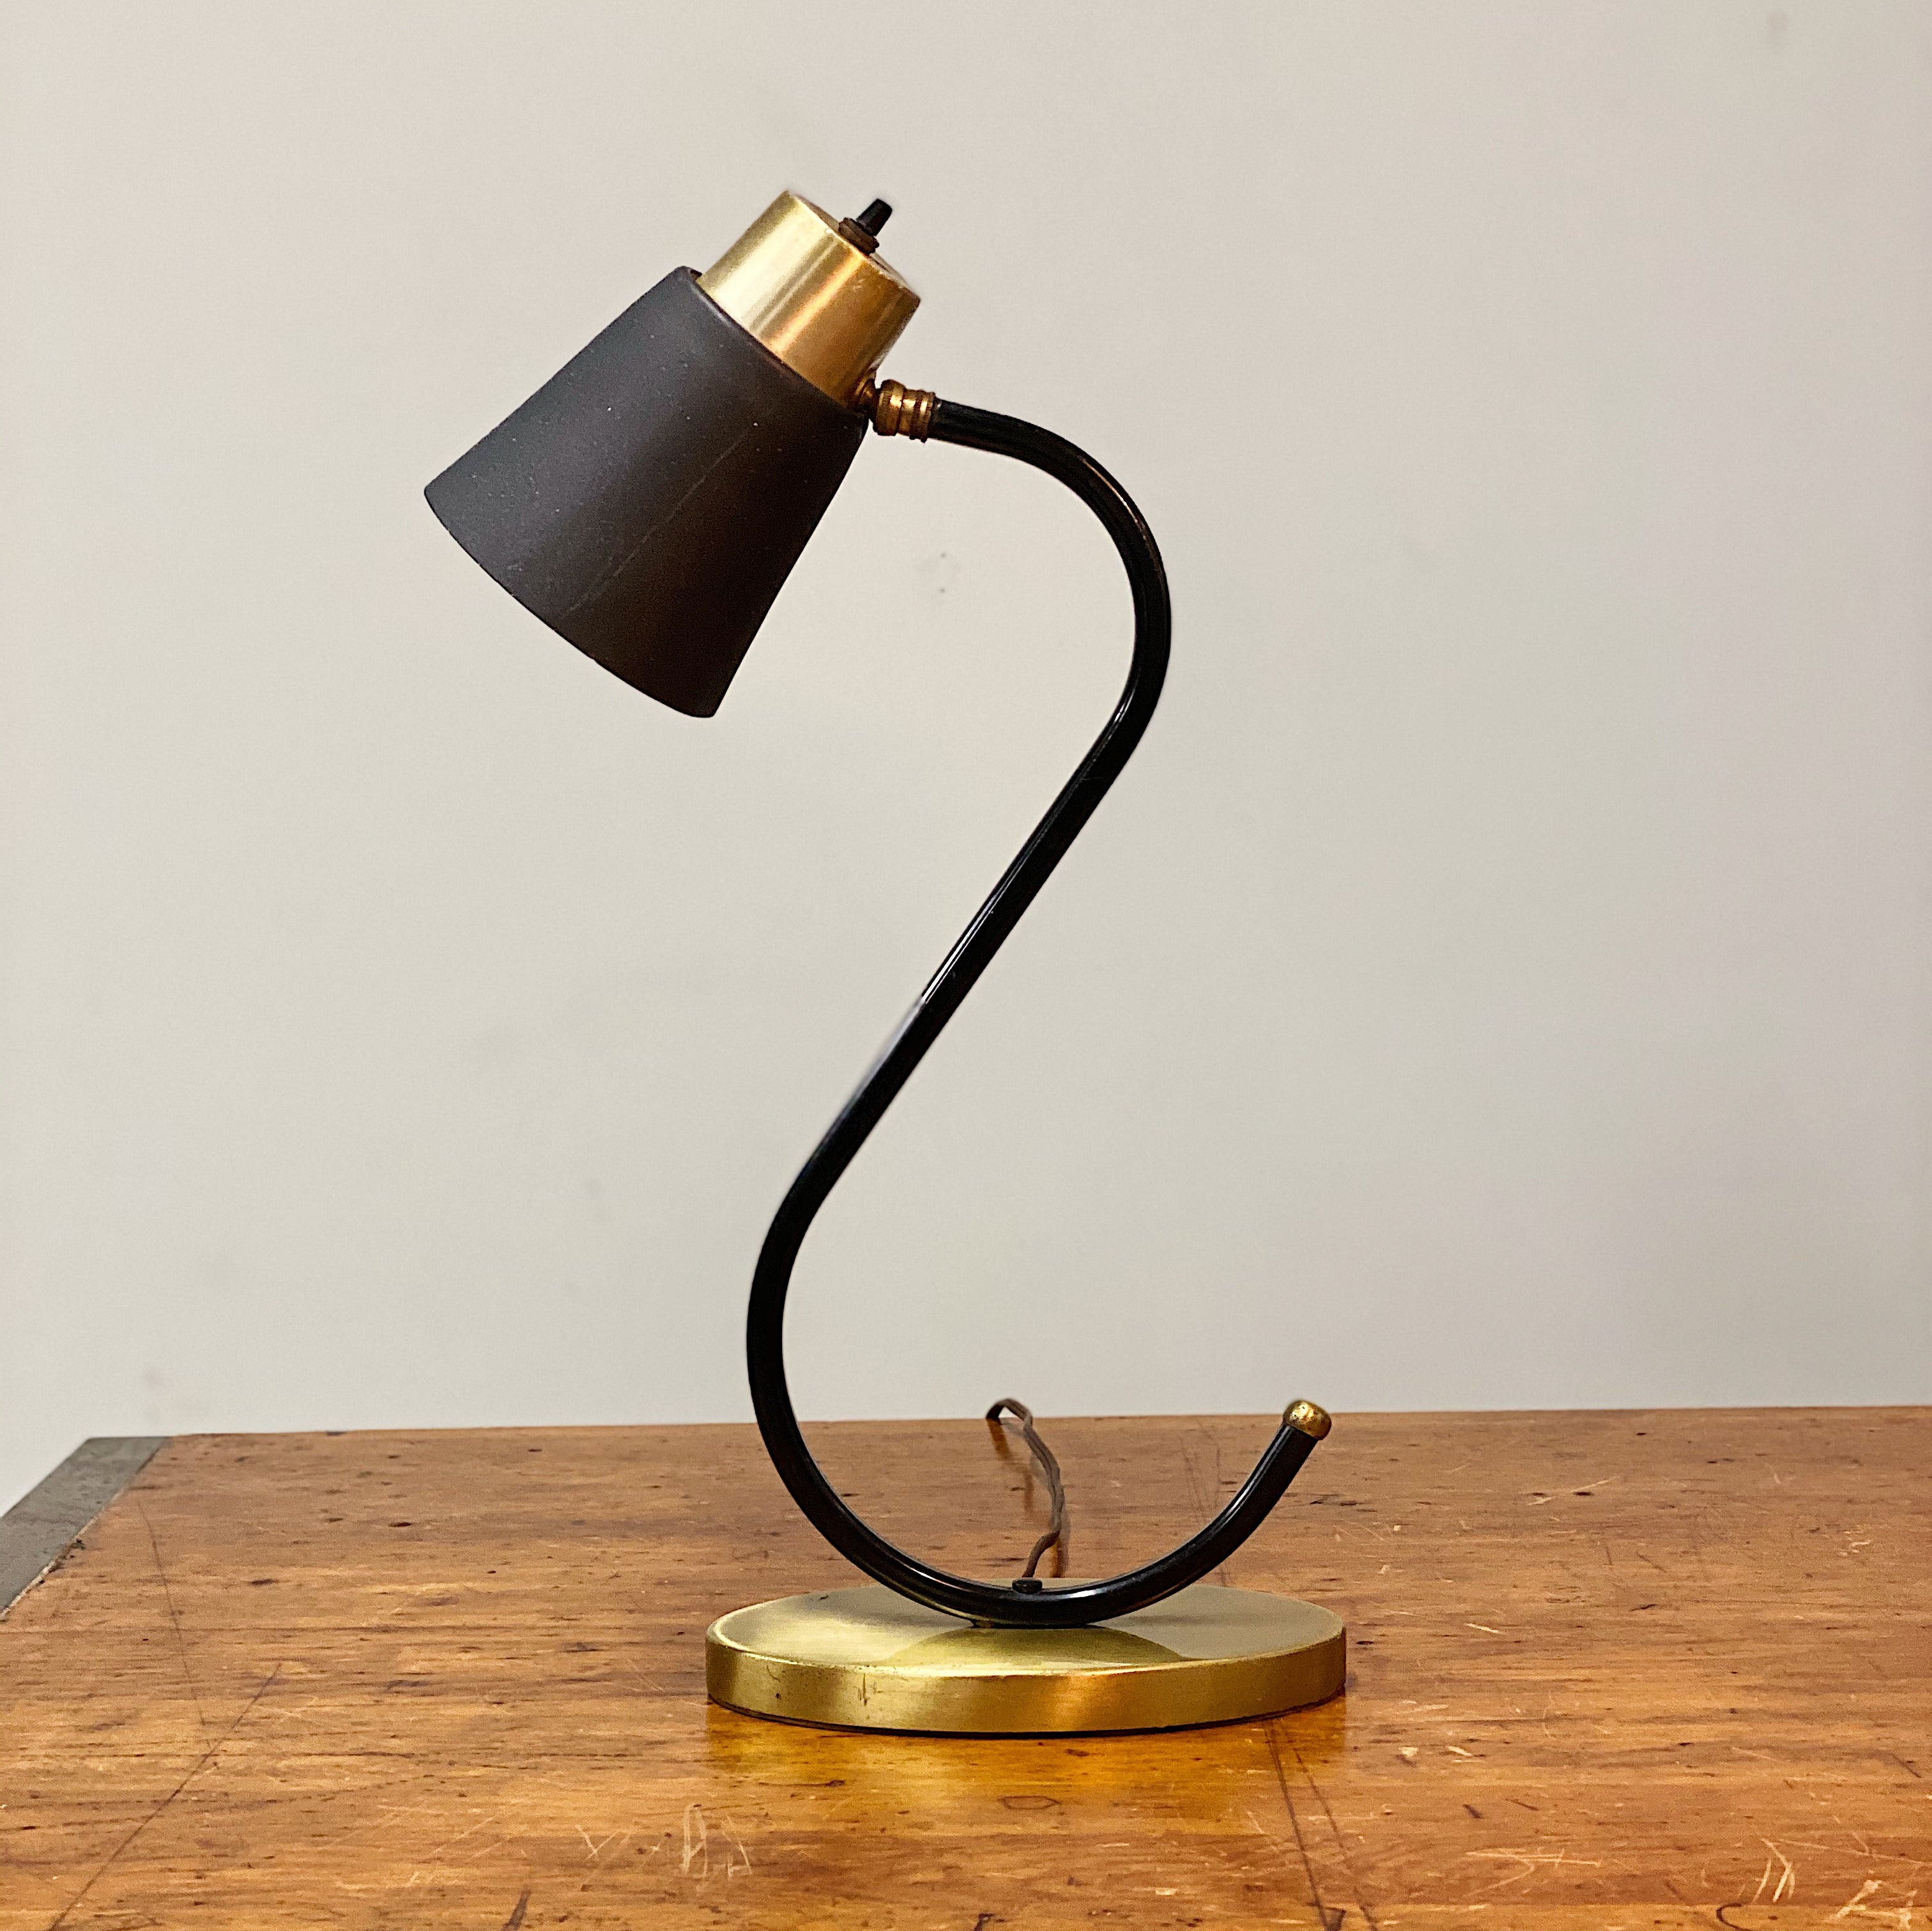 Vintage Midcentury Desk Lamp with Unusual S Shape - Mod Black Table Lamp - Atomic Age Lighting - Rare 1950s Accent Light